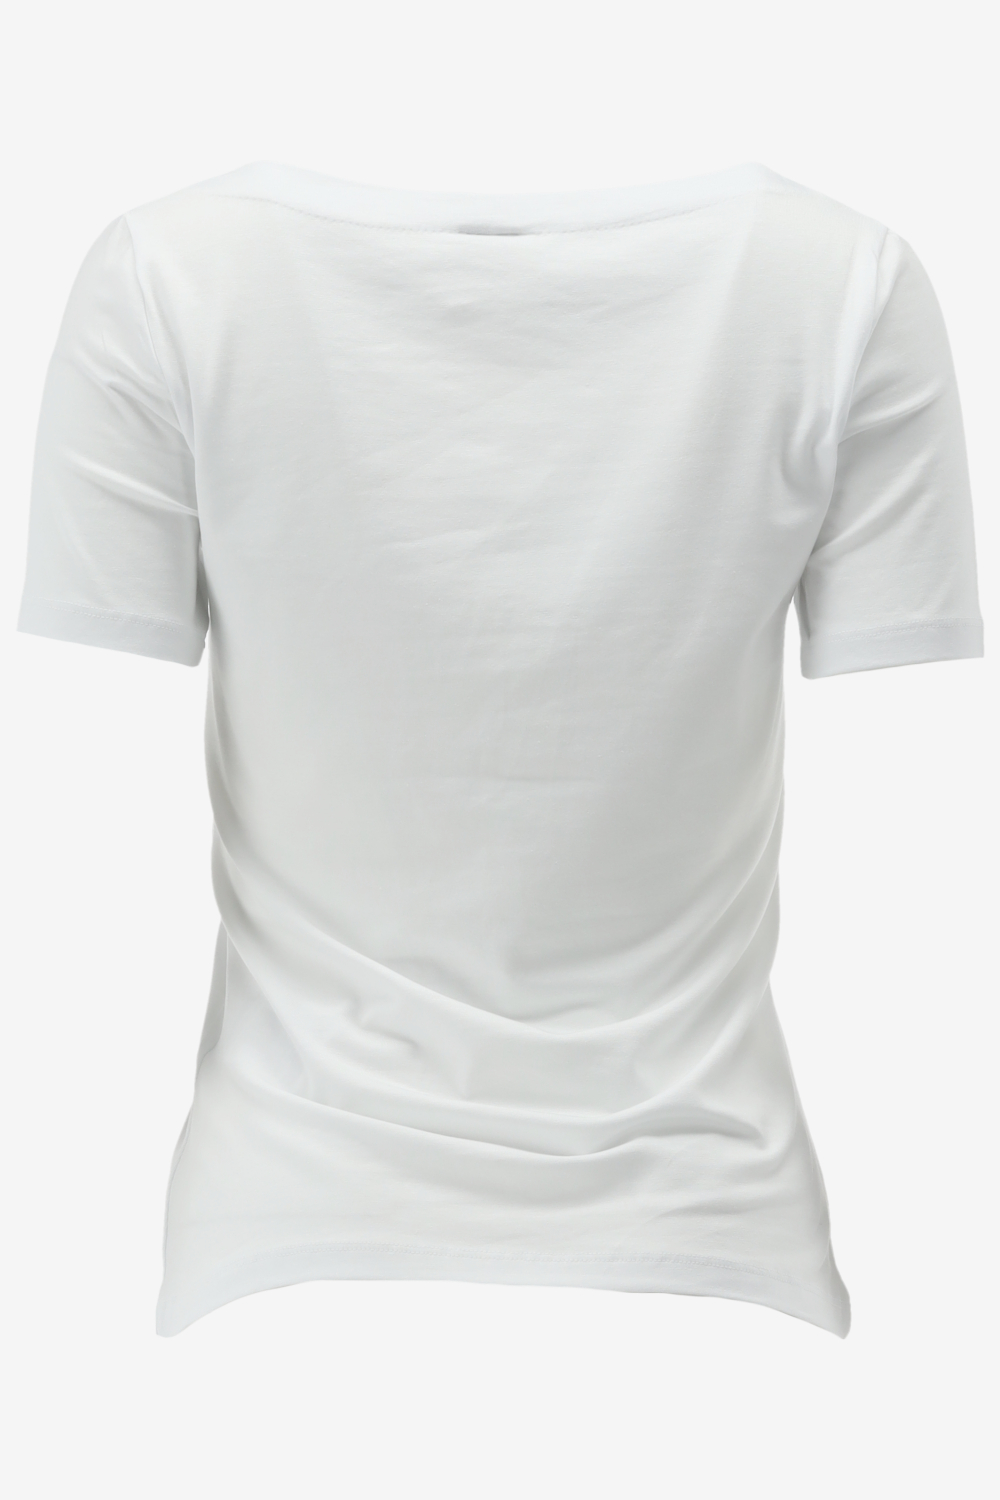 Vero Moda T-shirt PANDA MODAL